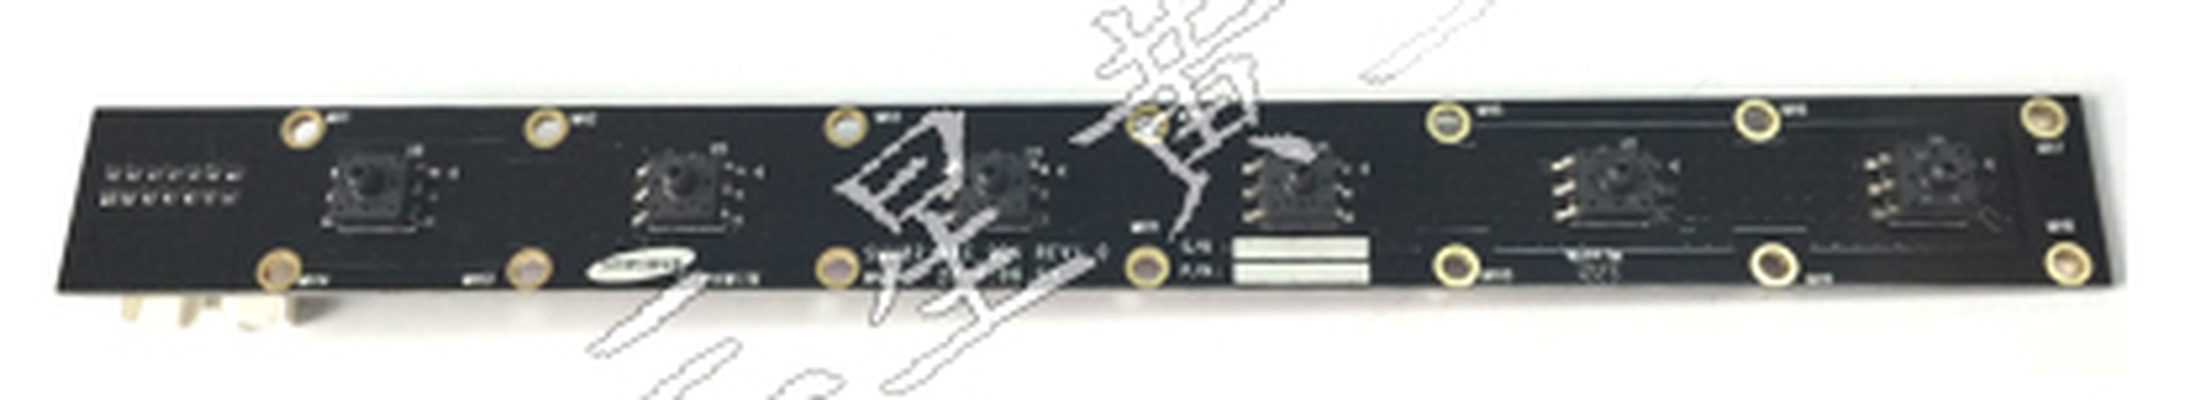 Samsung SM482 Vacuum Sensor Board Vacuum Test Board AM03-015254A